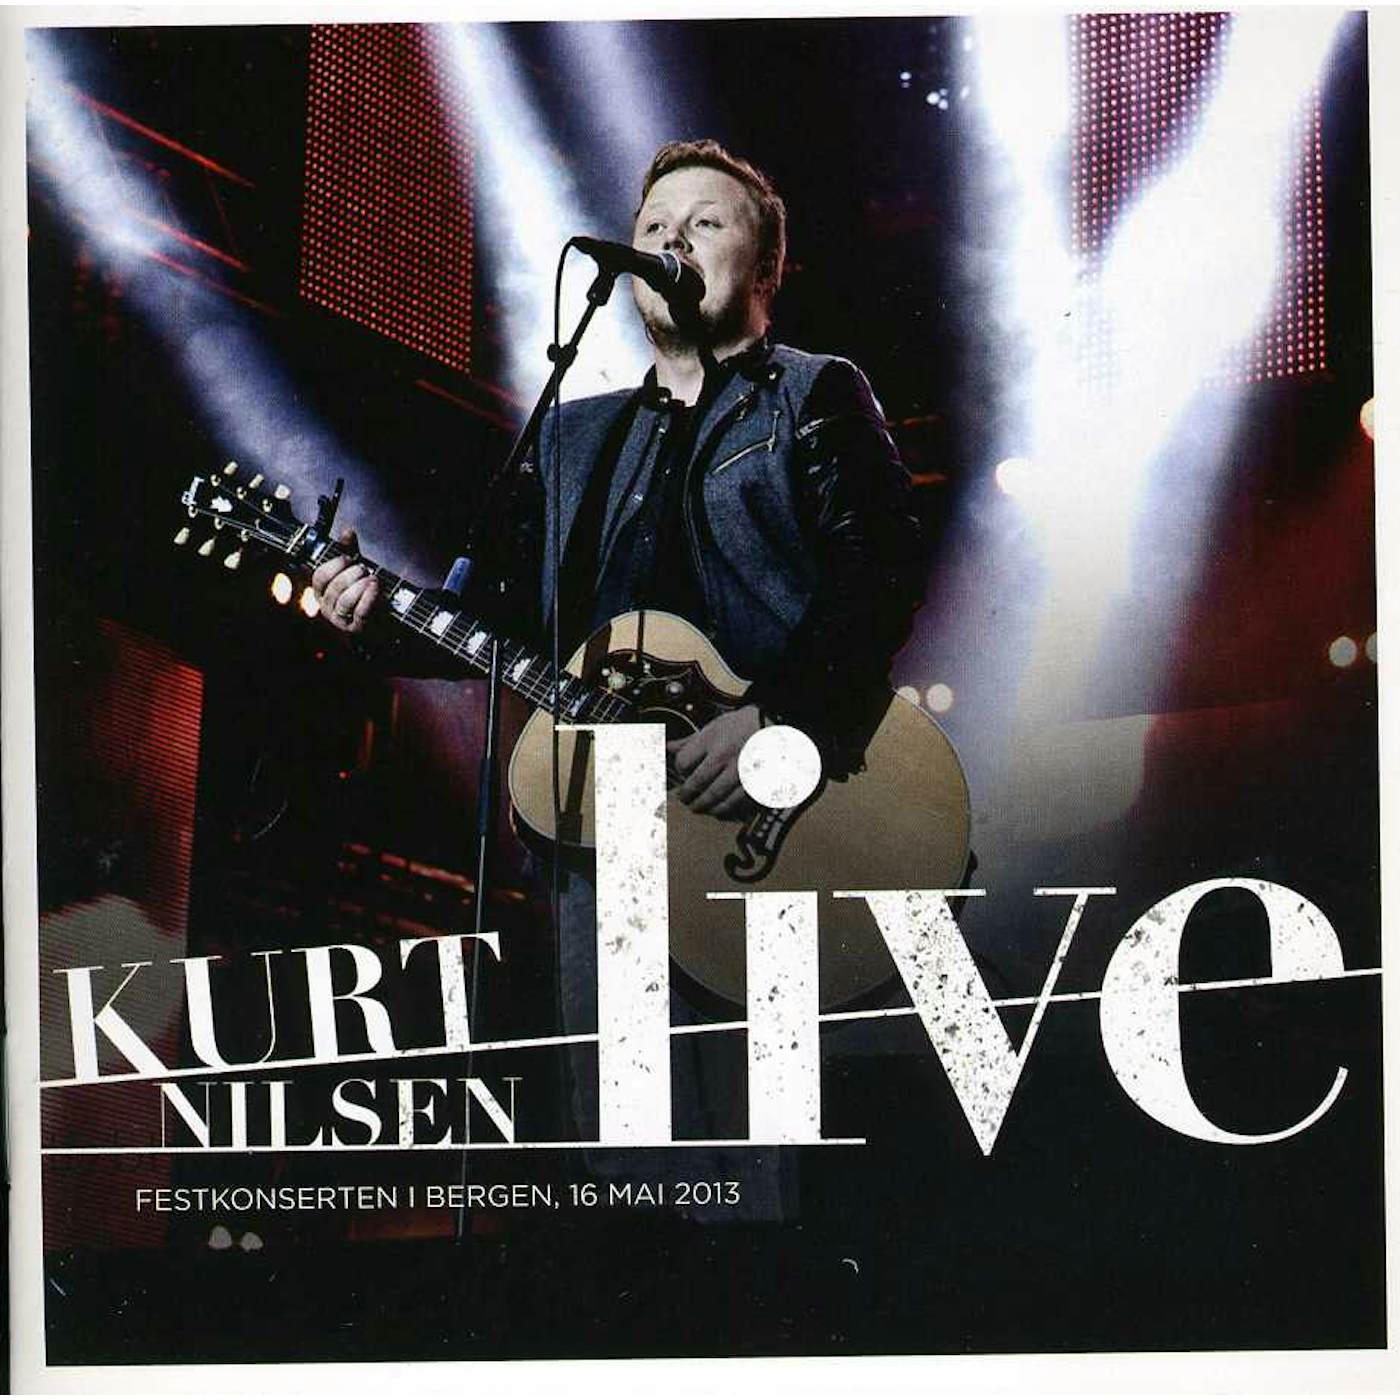 Kurt Nilsen LIVE CD